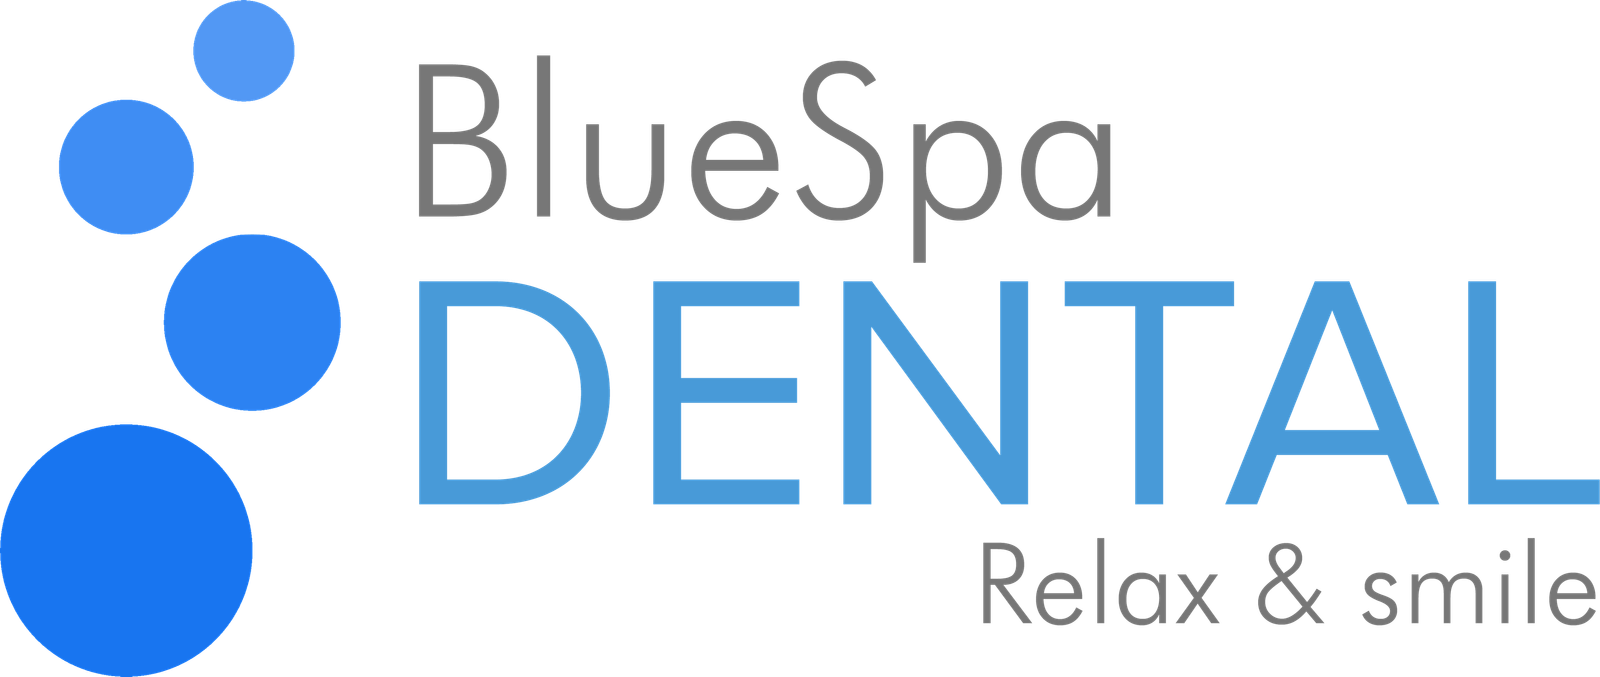 BlueSpa Dental